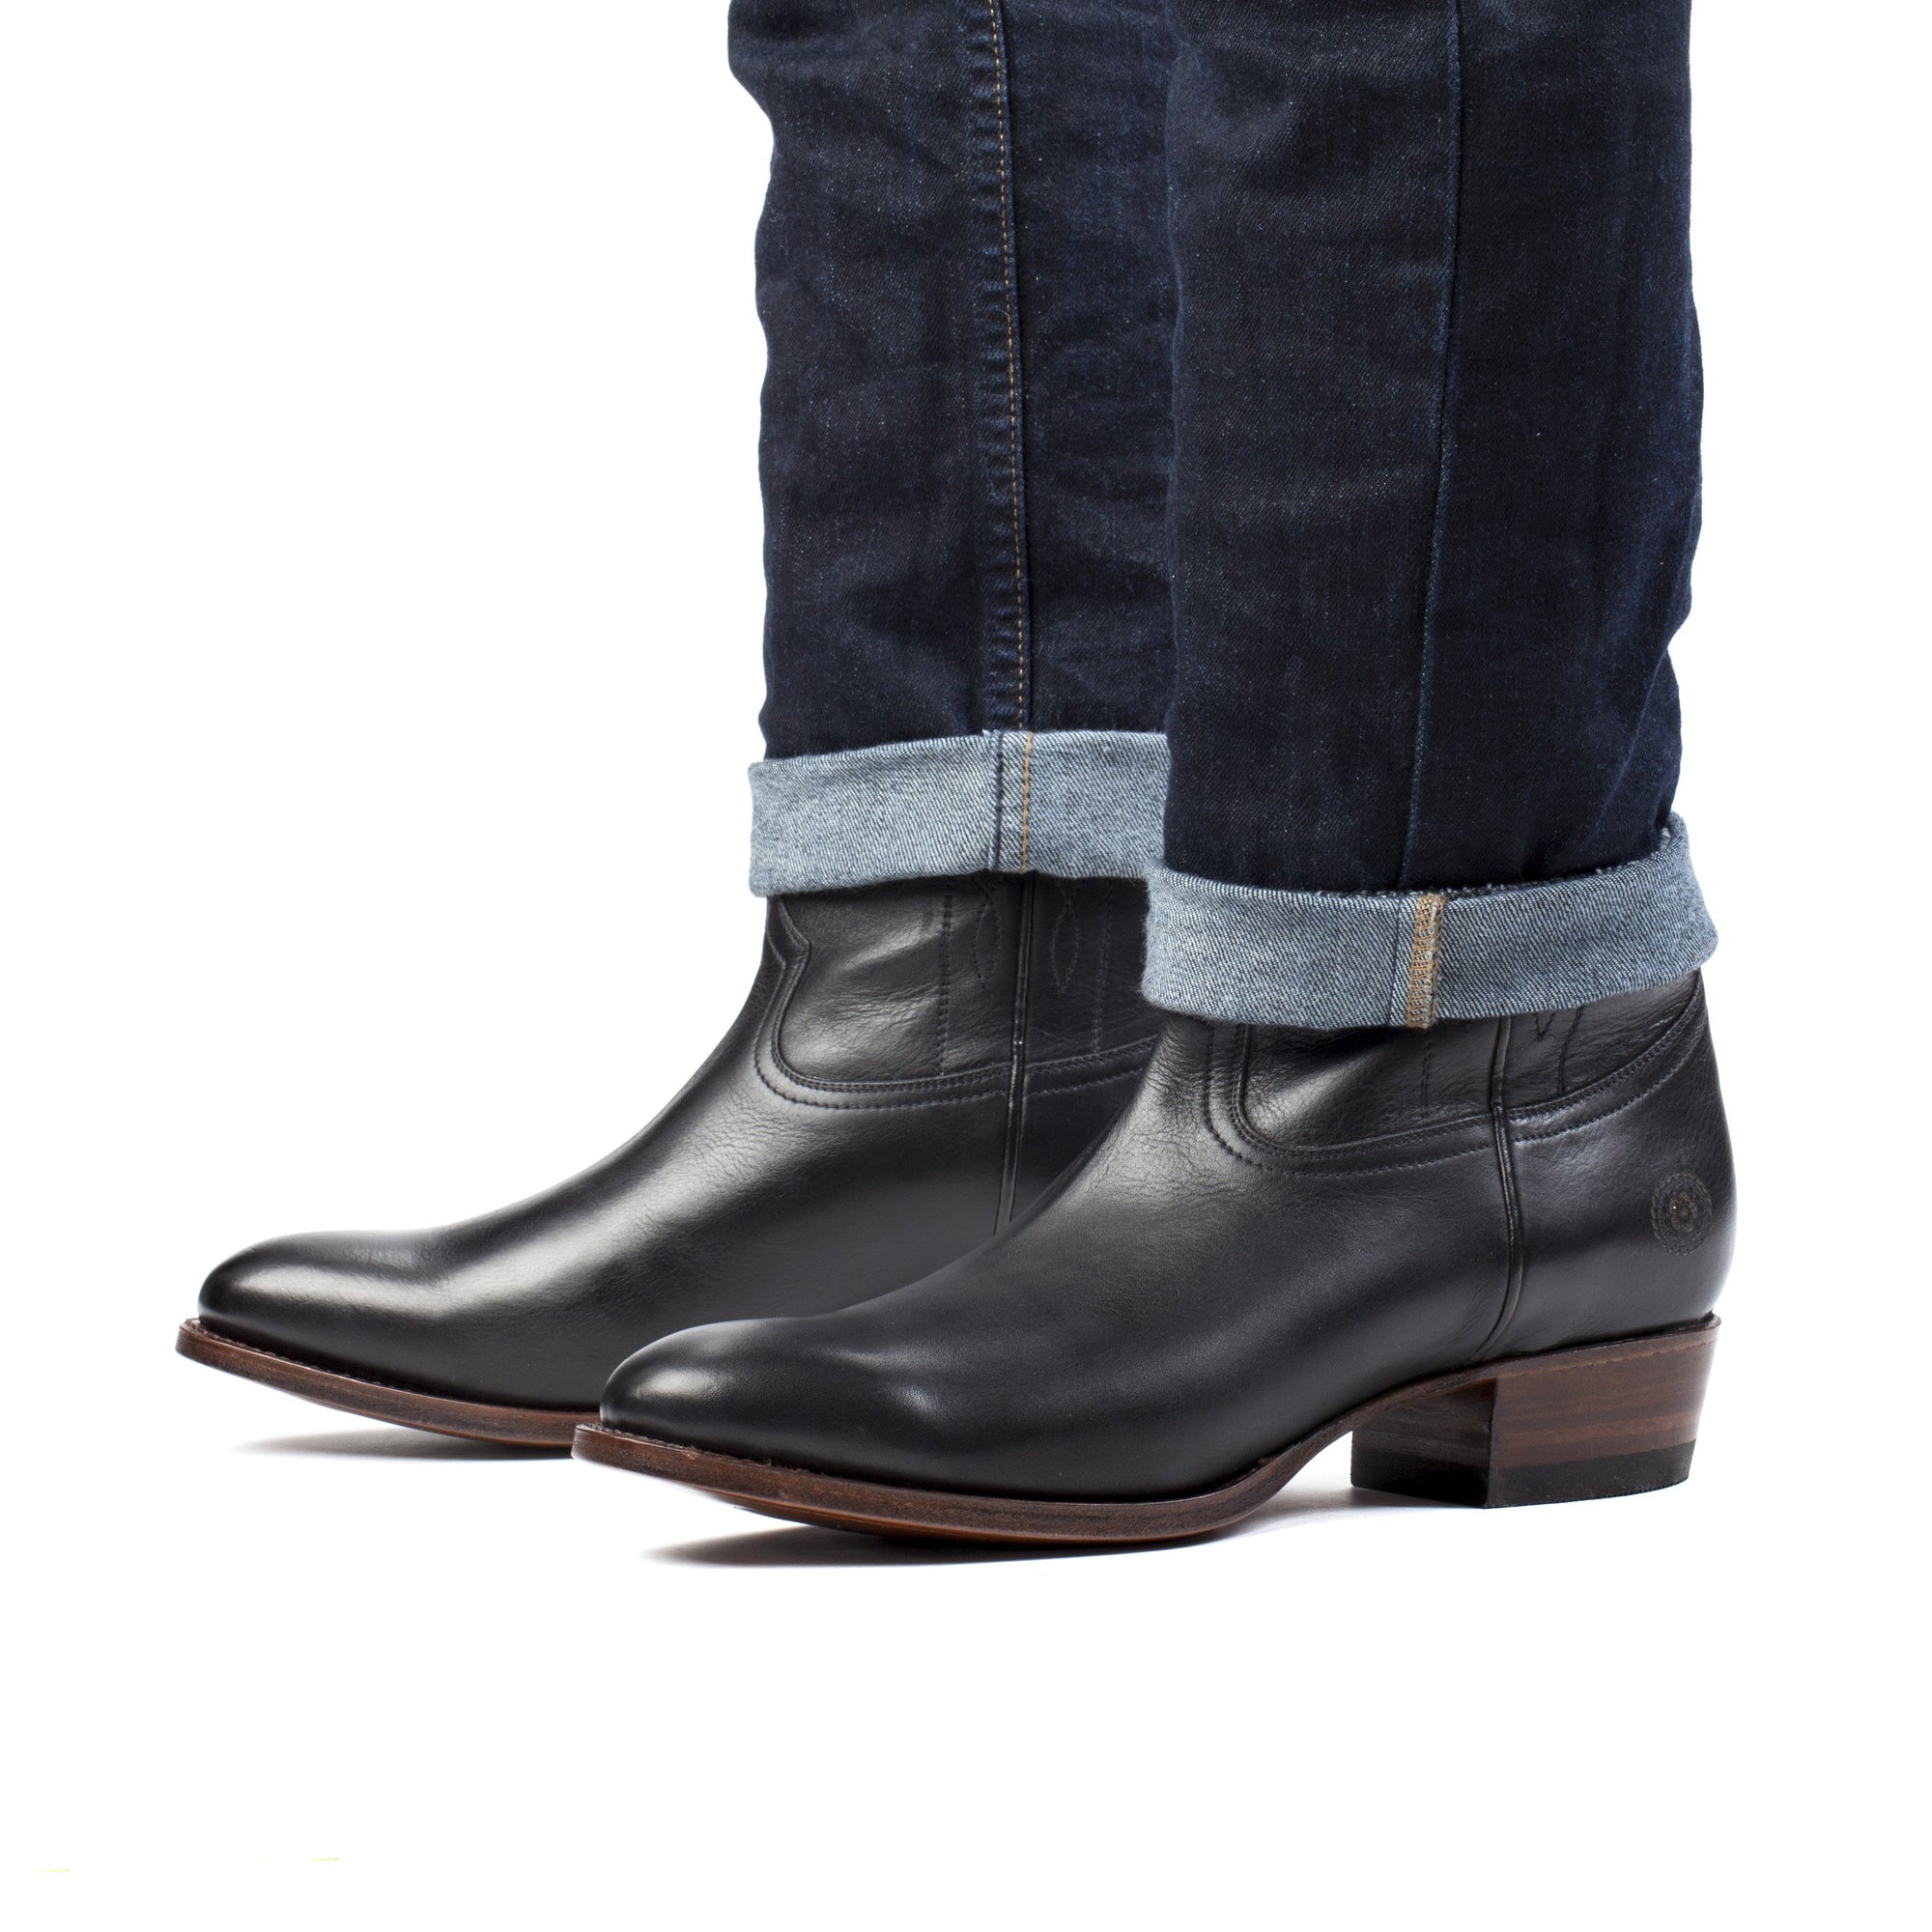 mens cowboy boots on sale